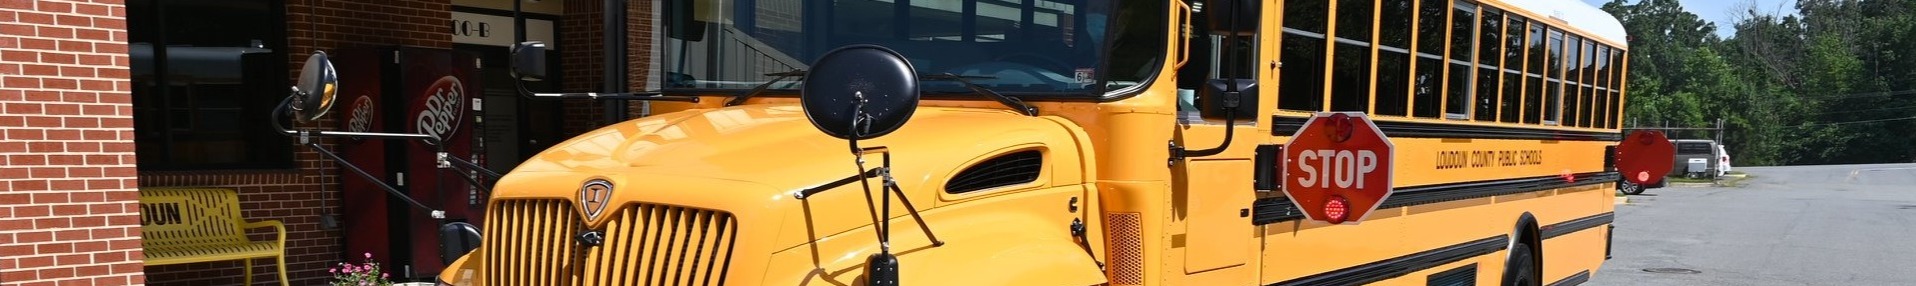 loudoun county public schools yellow school bus